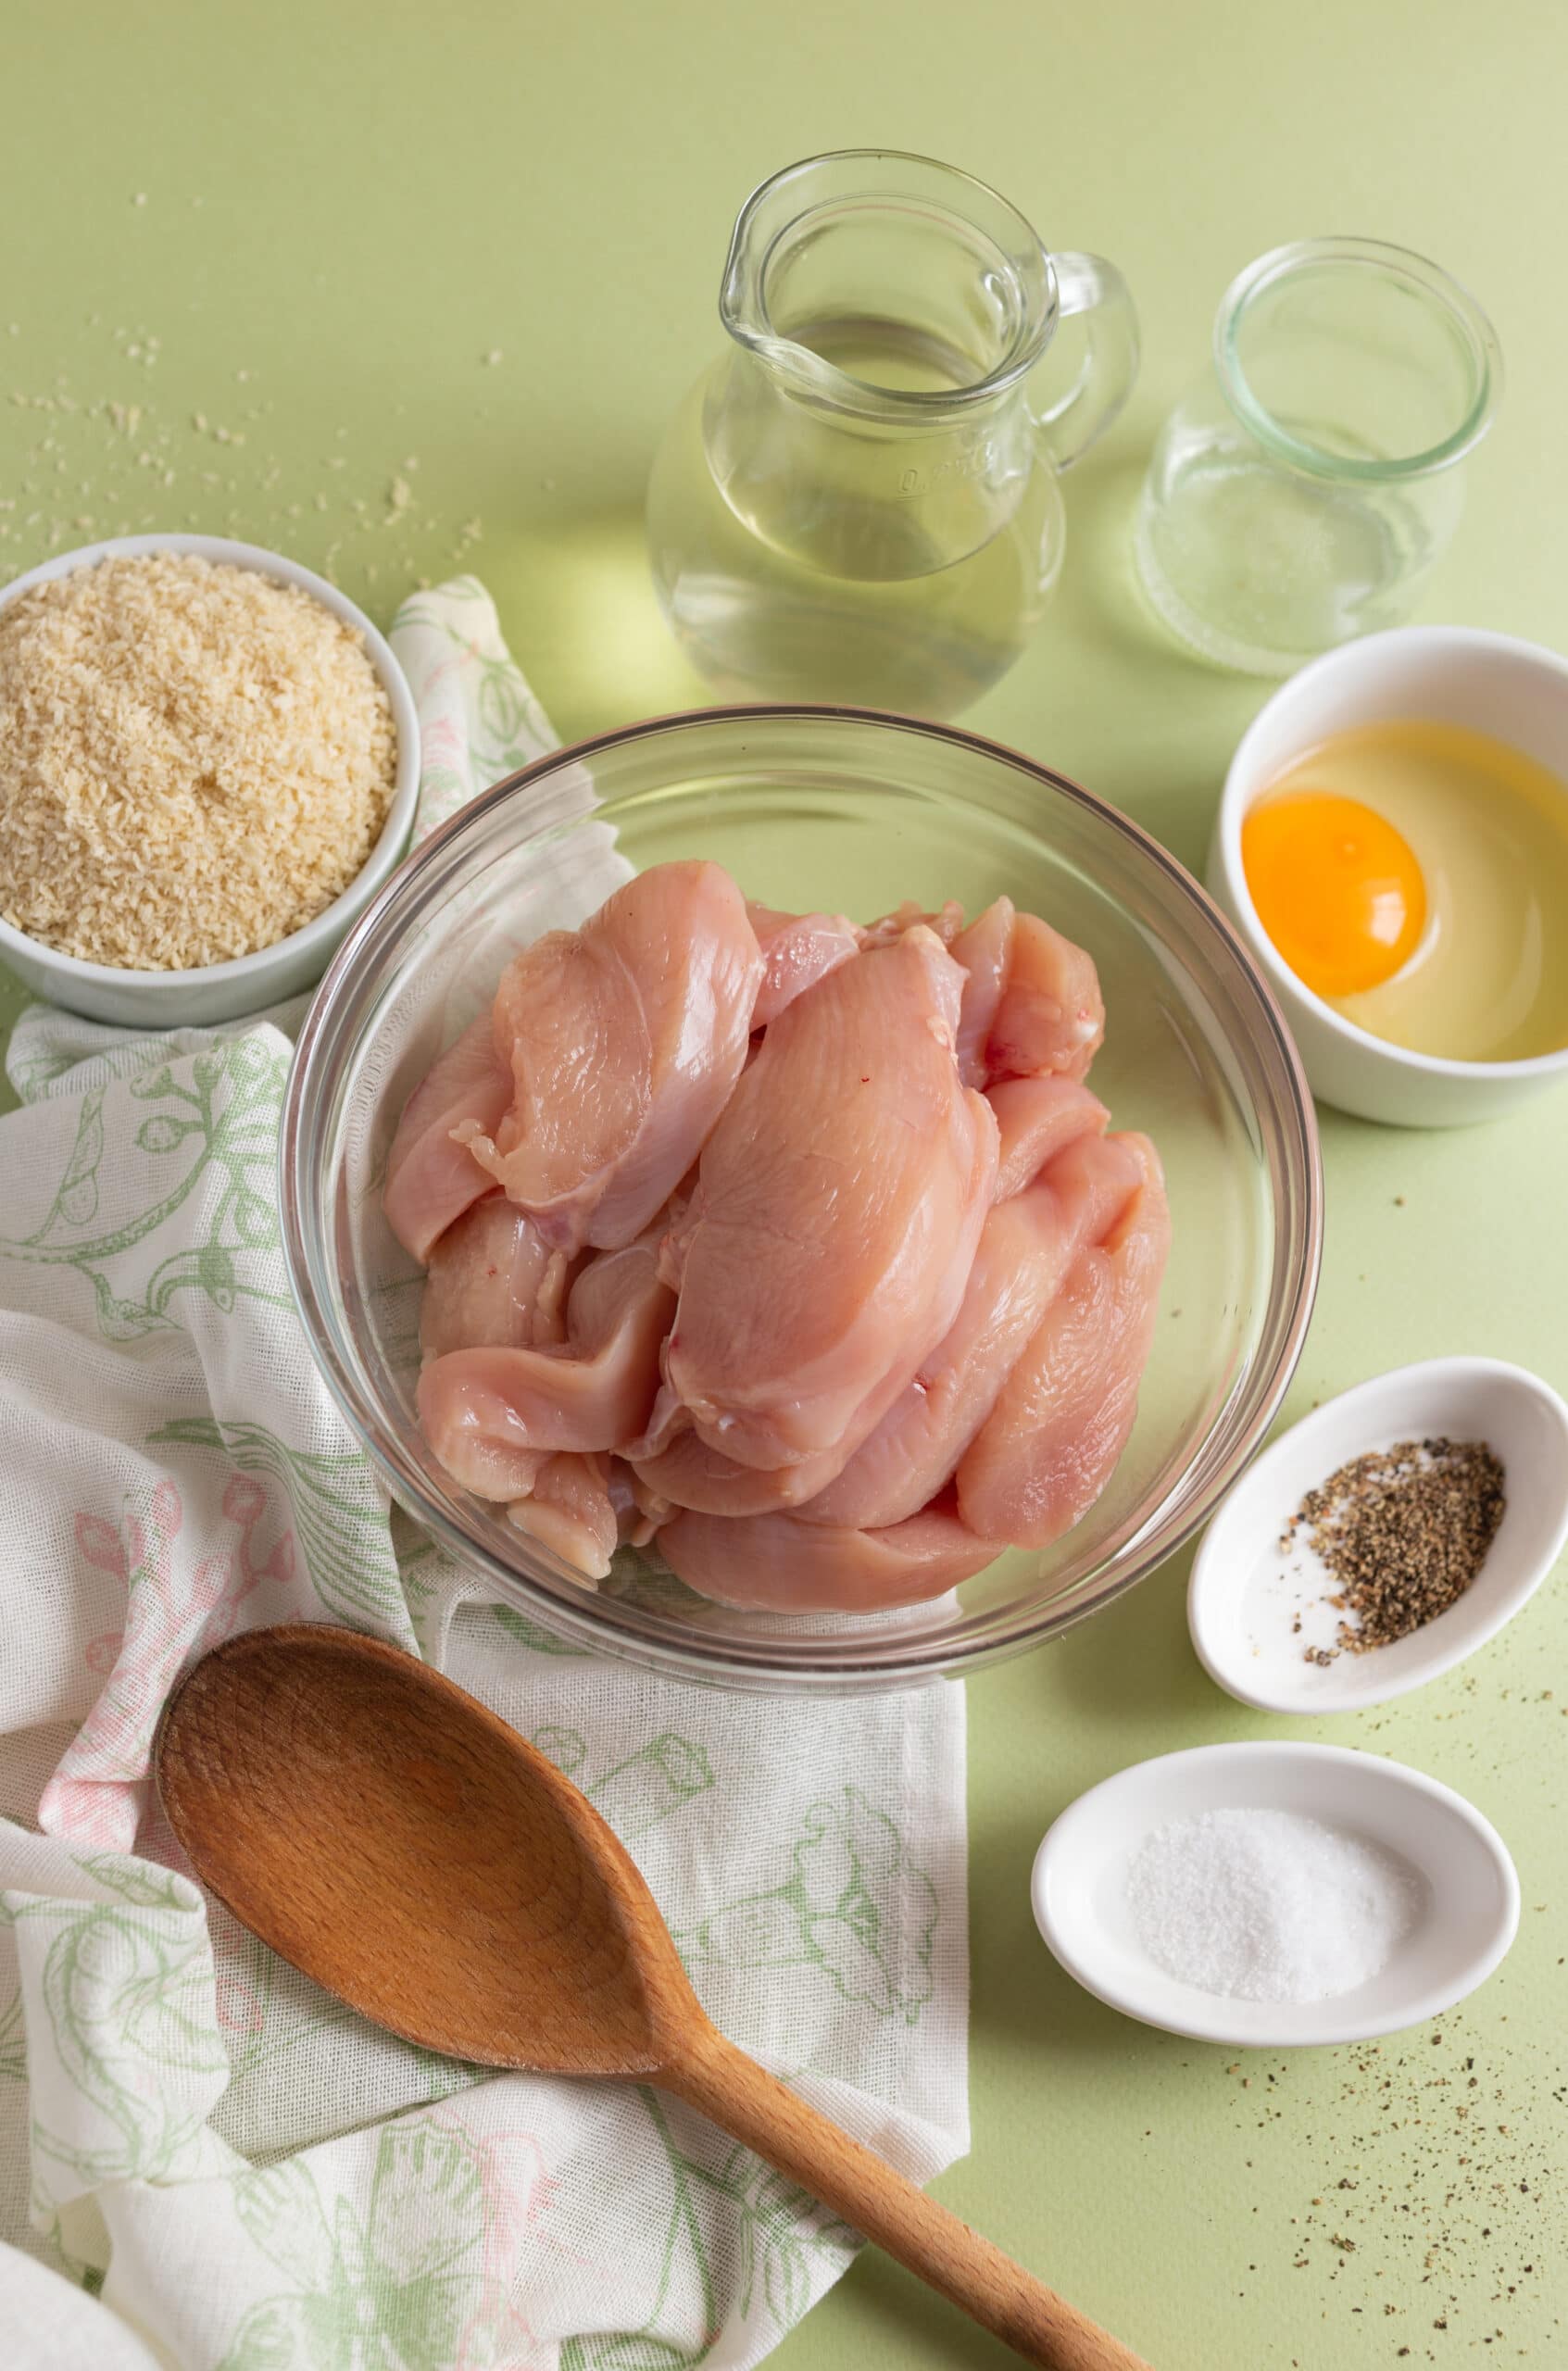 Ingredients for brined chicken